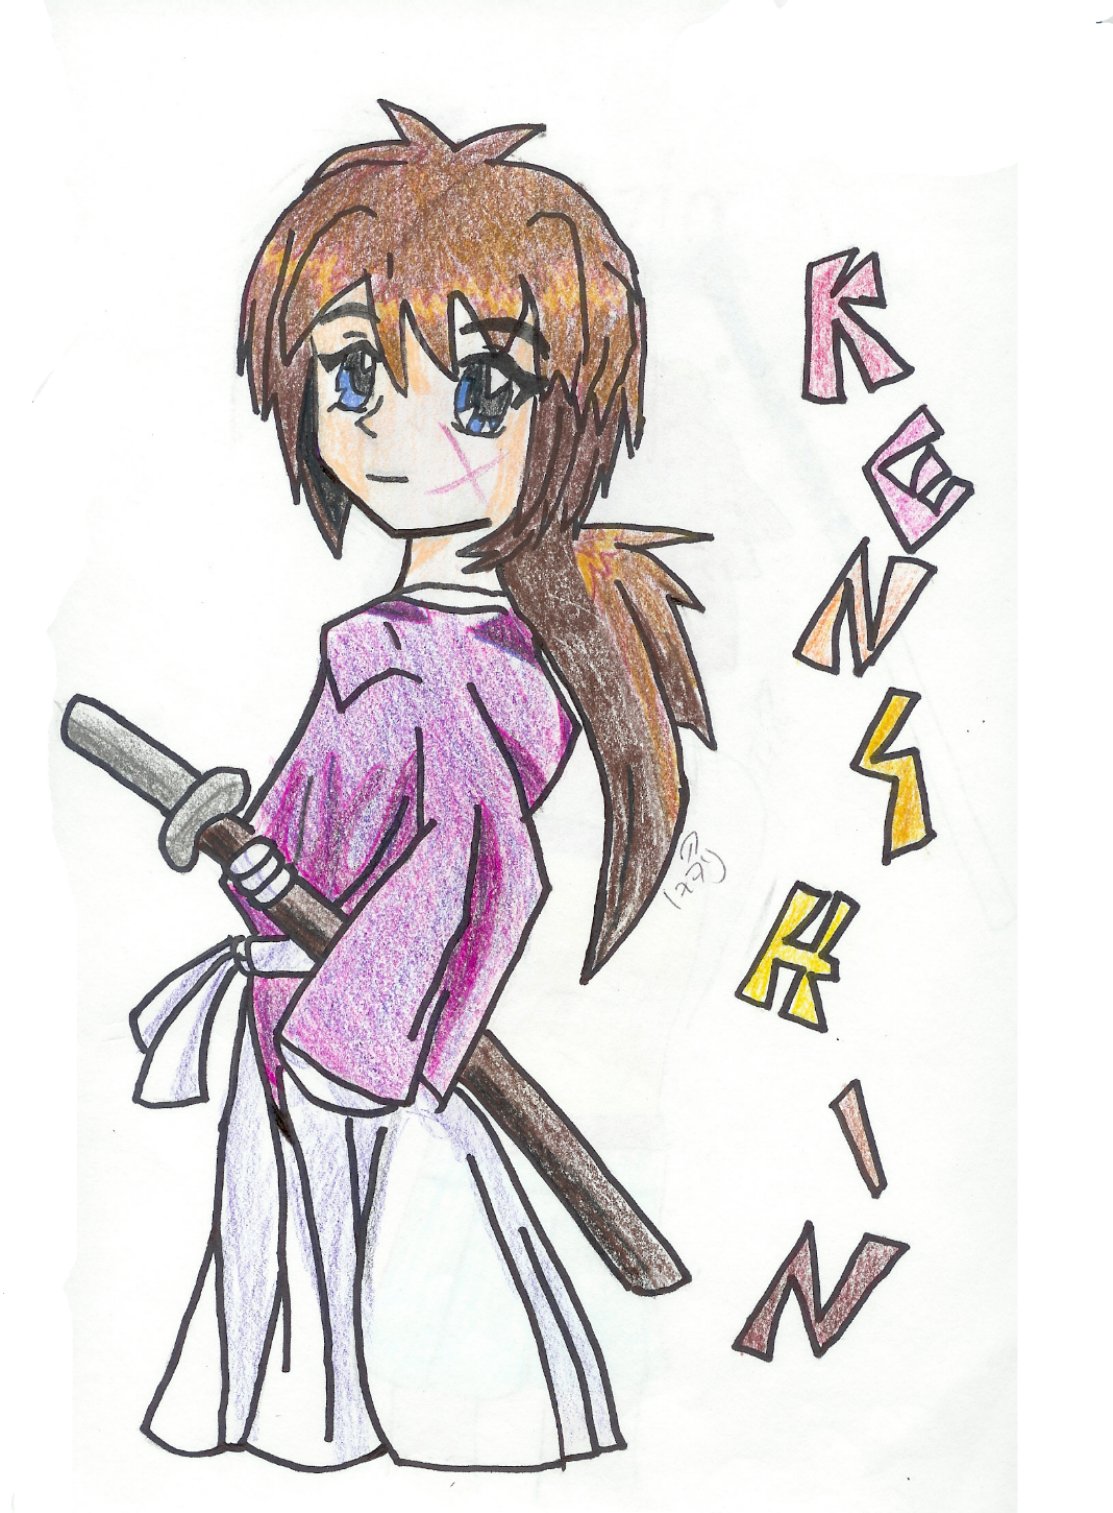 Chibi Kenshin by skuldhammer